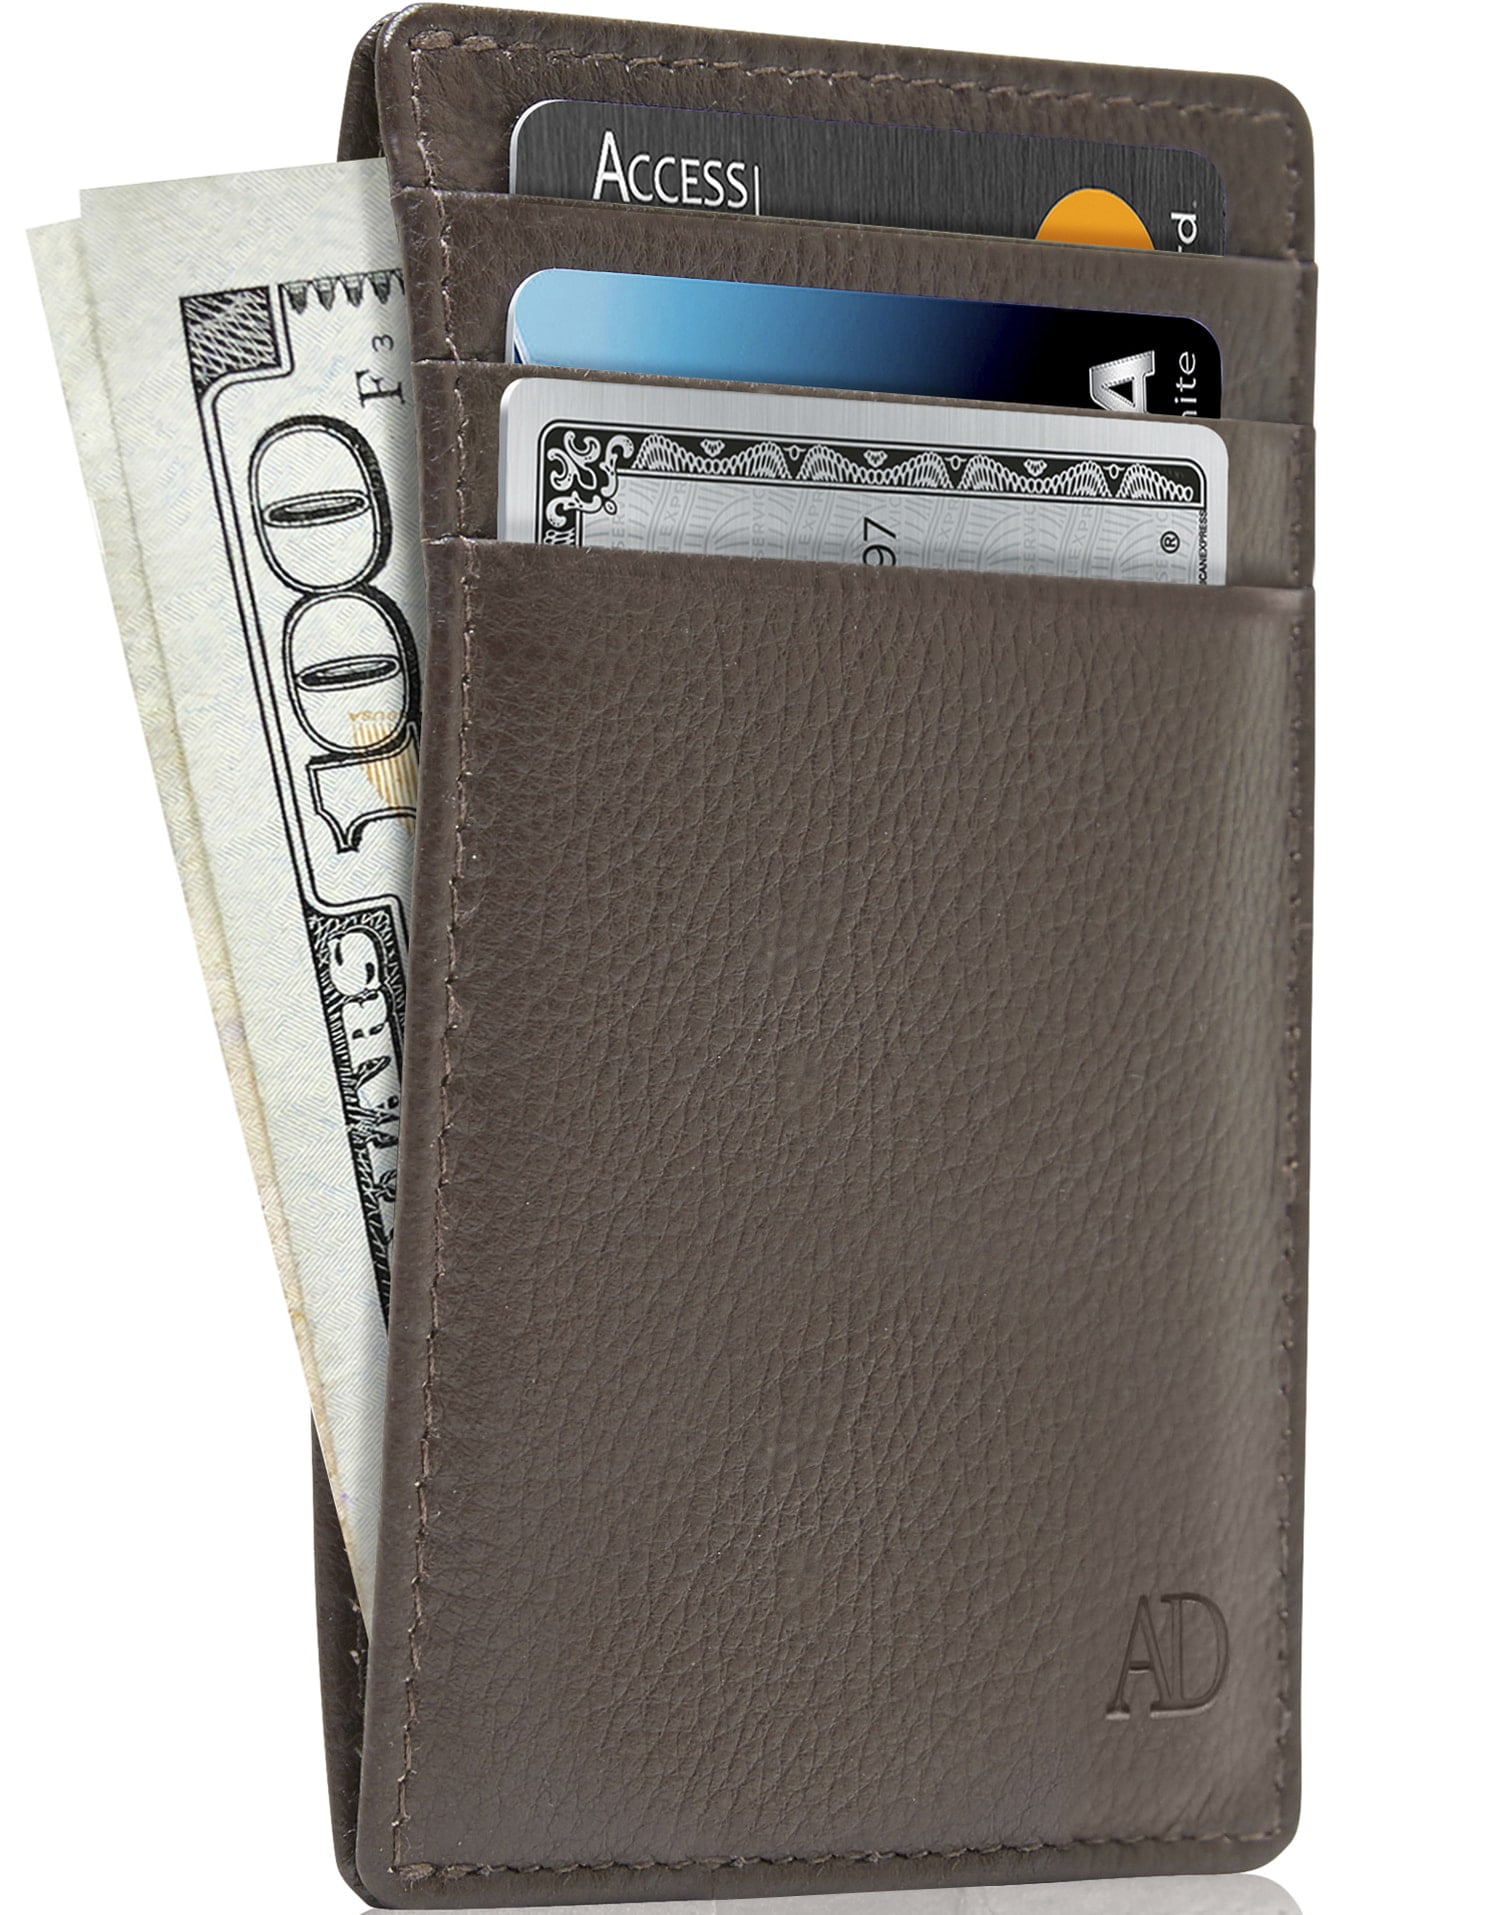 Slim Wallet RFID Front Pocket Wallet Minimalist Secure Thin Credit Card Holder by Odifen 